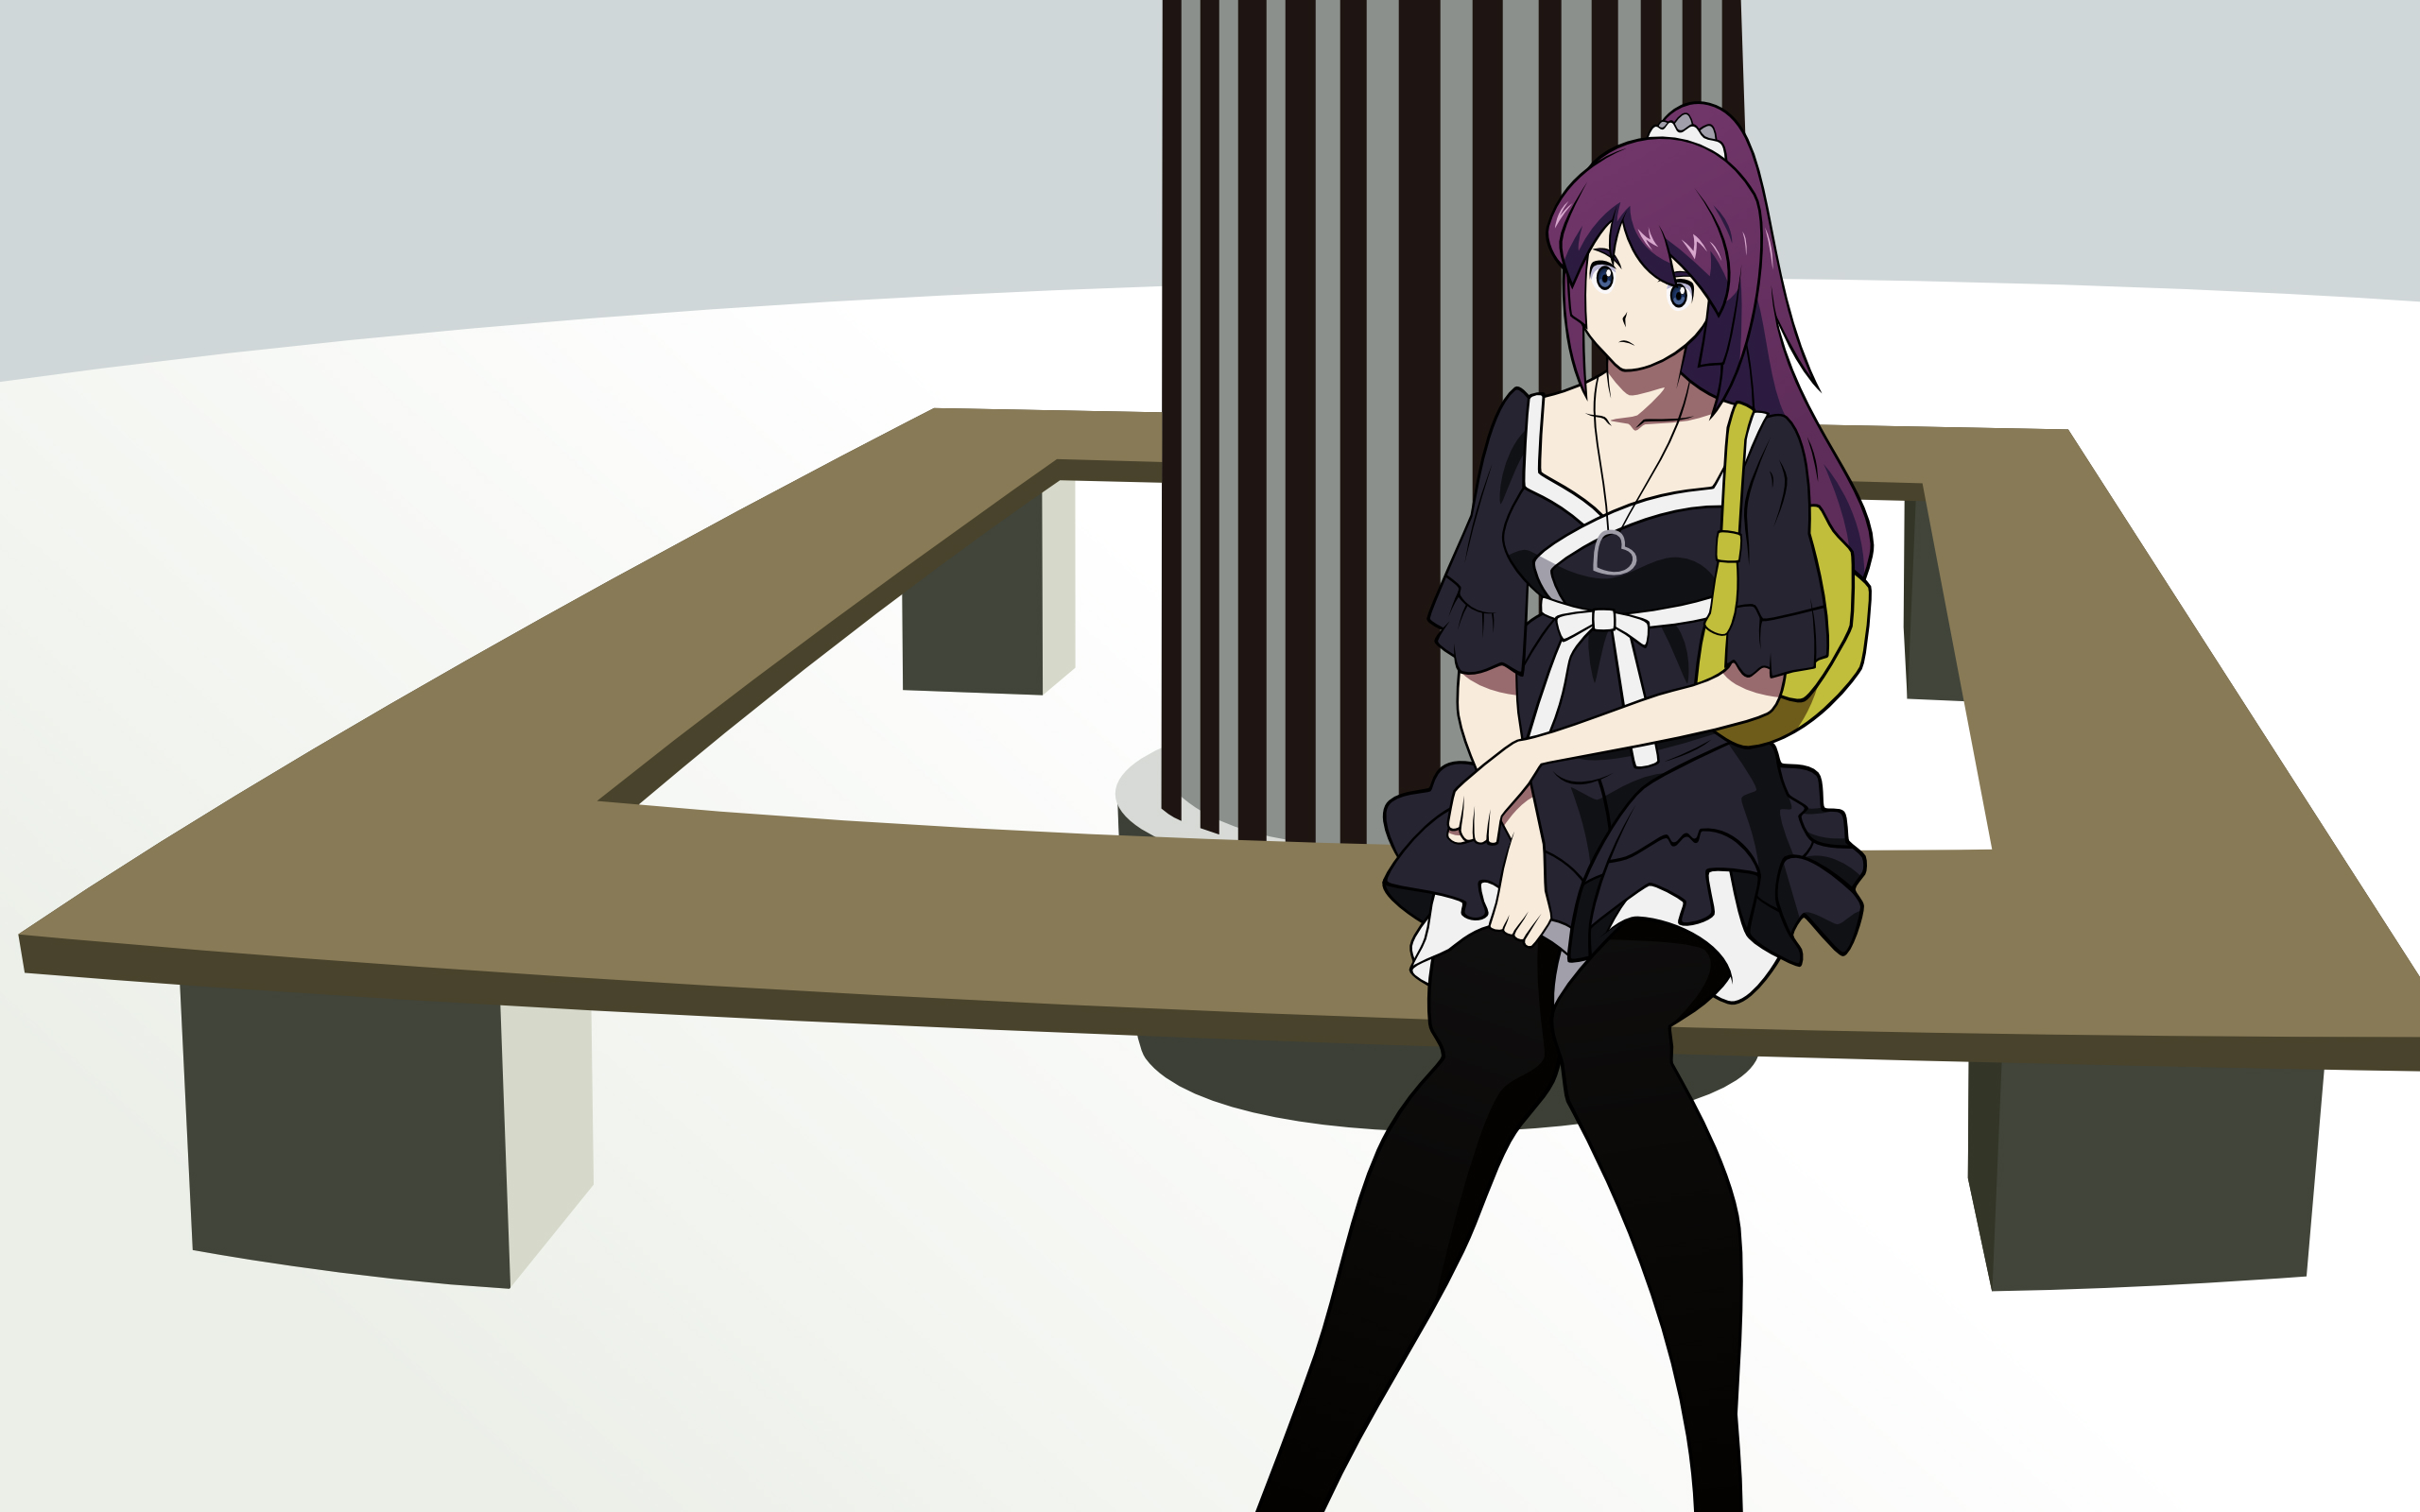 Anime character, Hitagi Senjōgahara, from the Monogatari series, with purple hair.